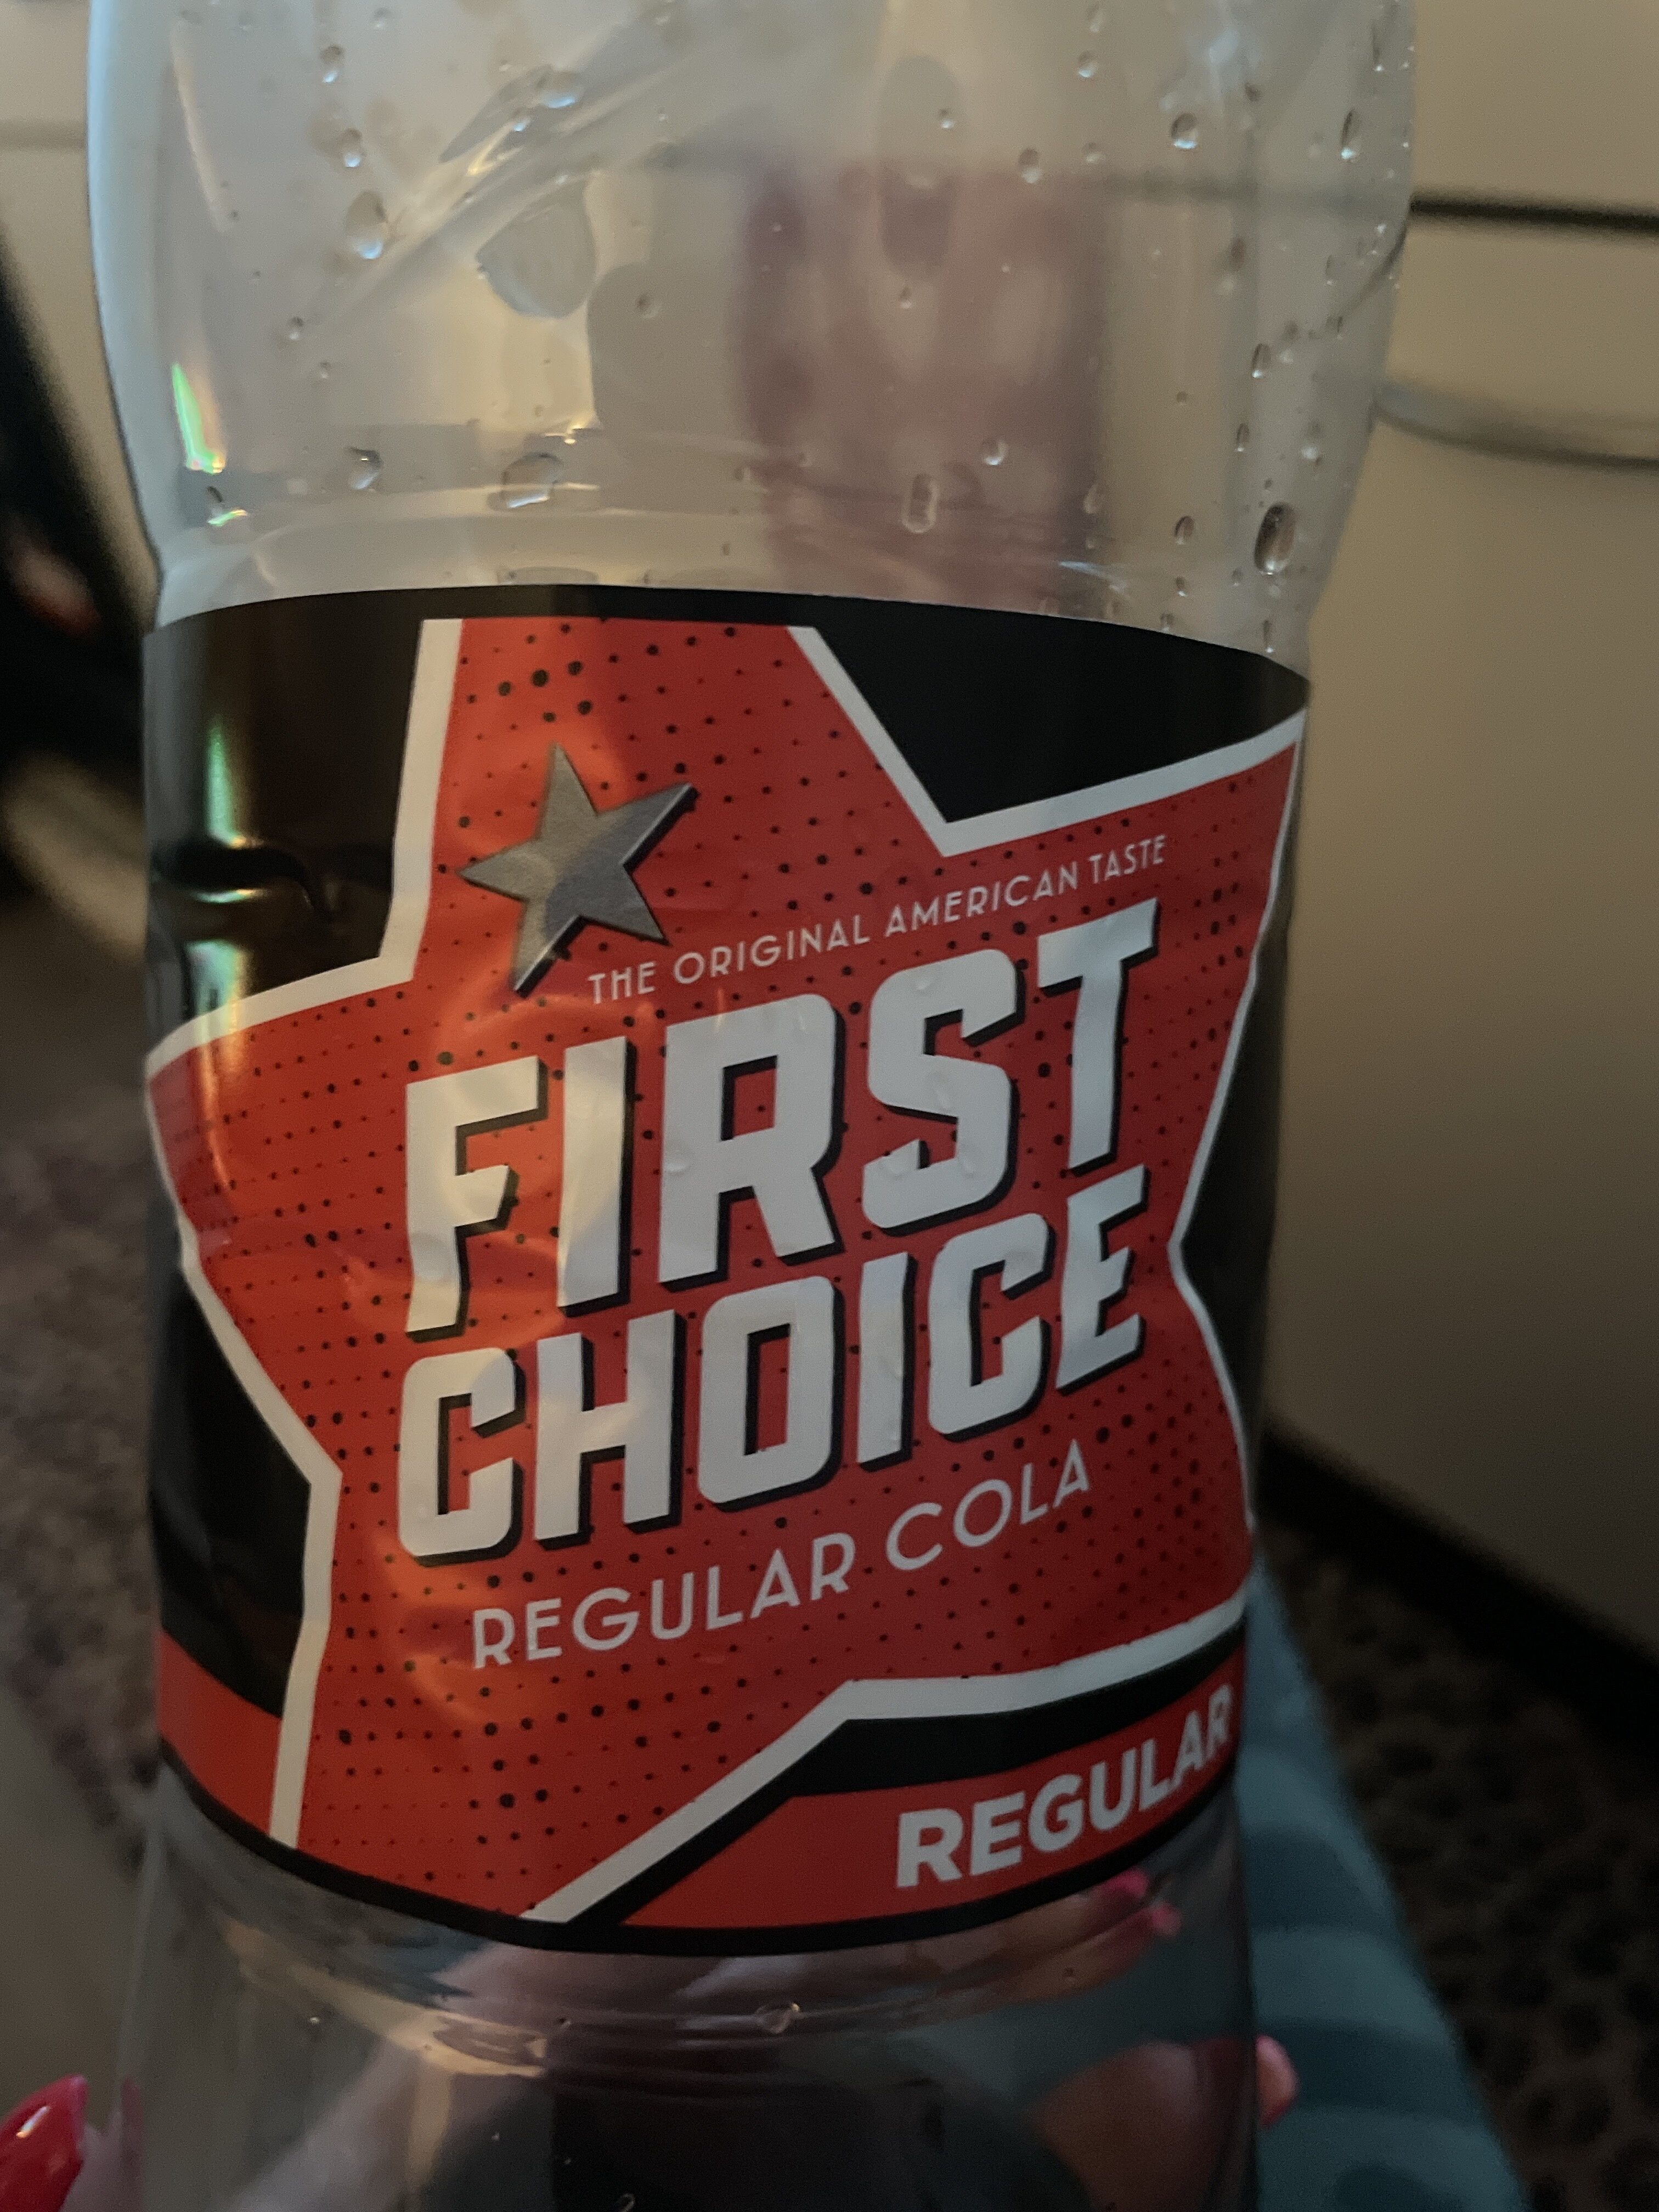 Regular cola - Product